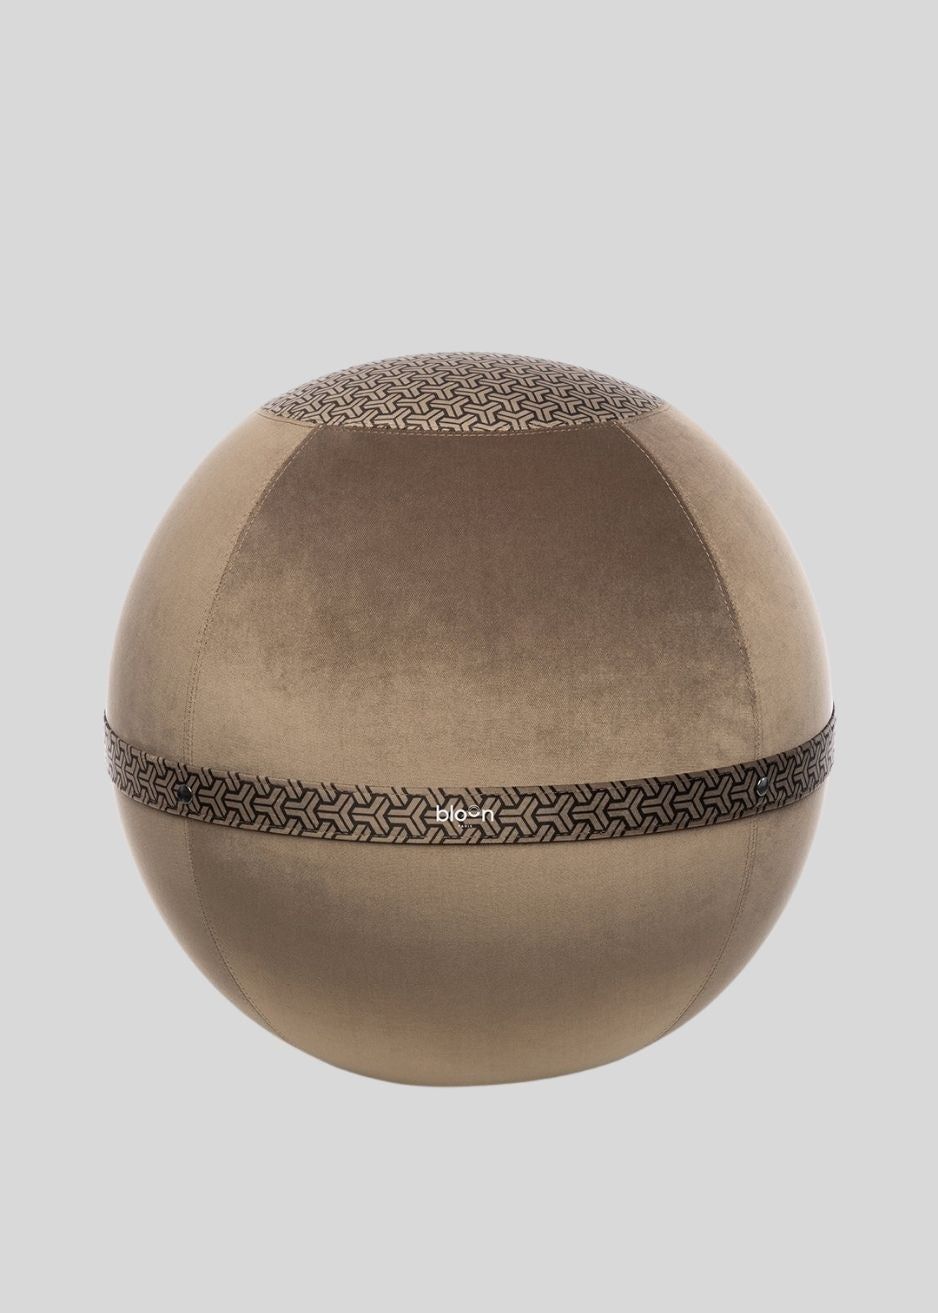 Bloon Paris Sitzball, das Original aus Paris